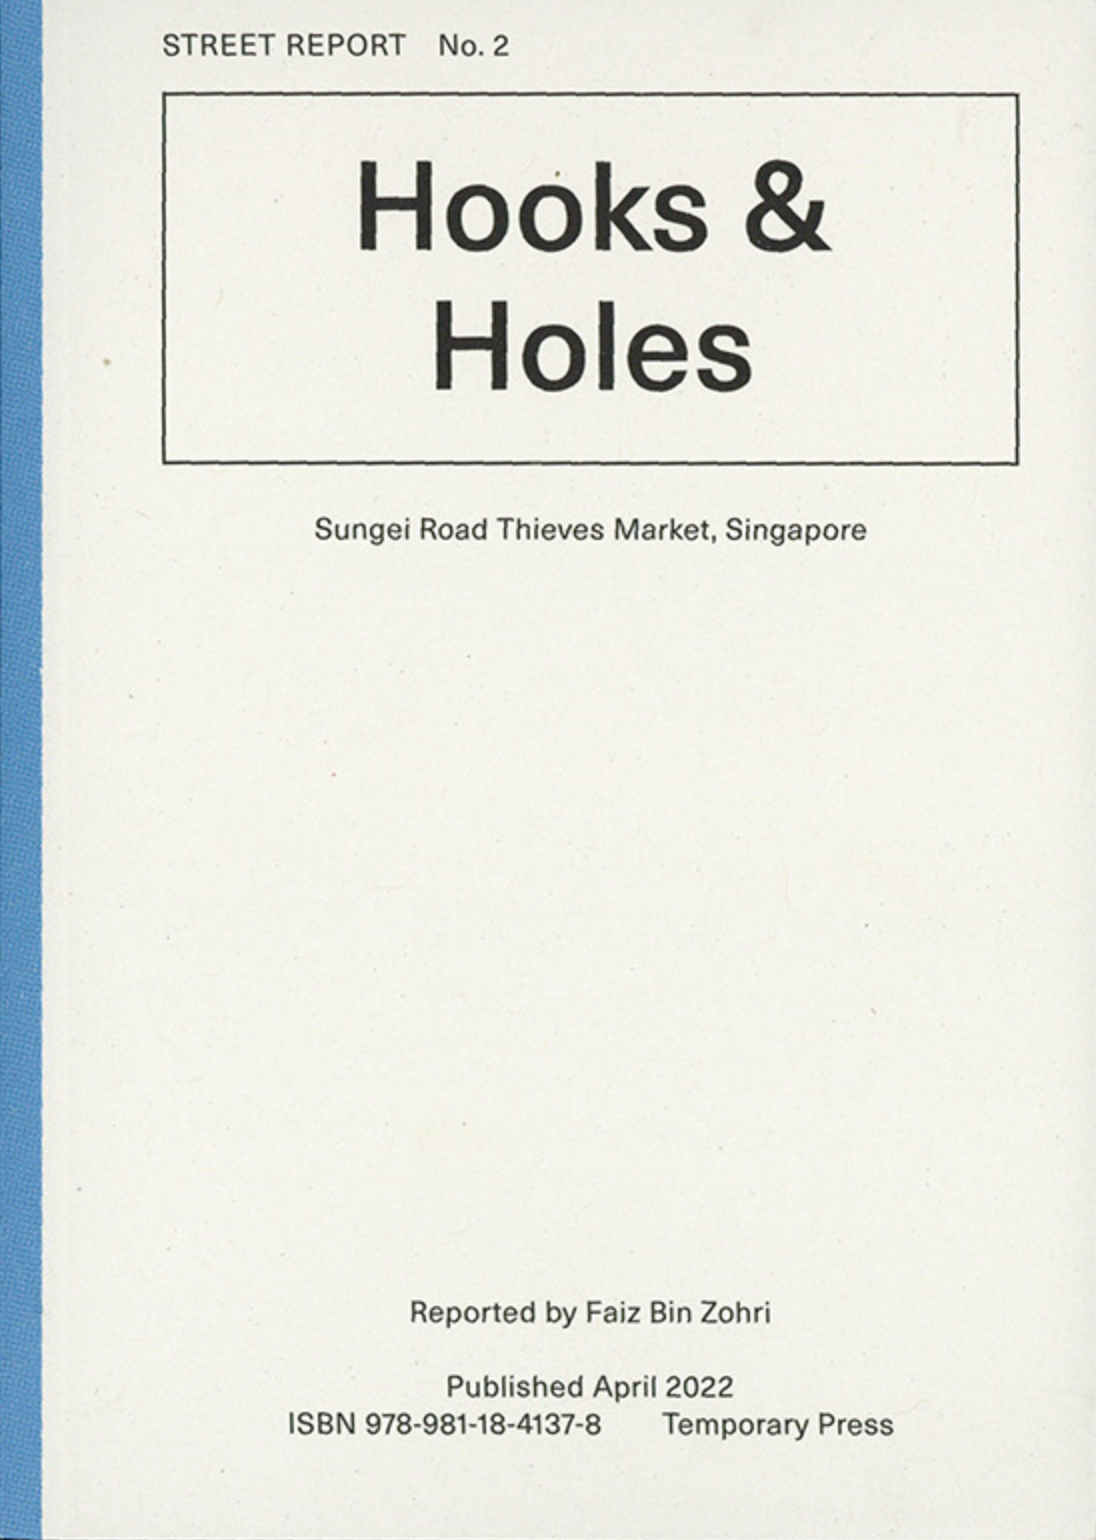 Street Report 2 : Hooks & Holes